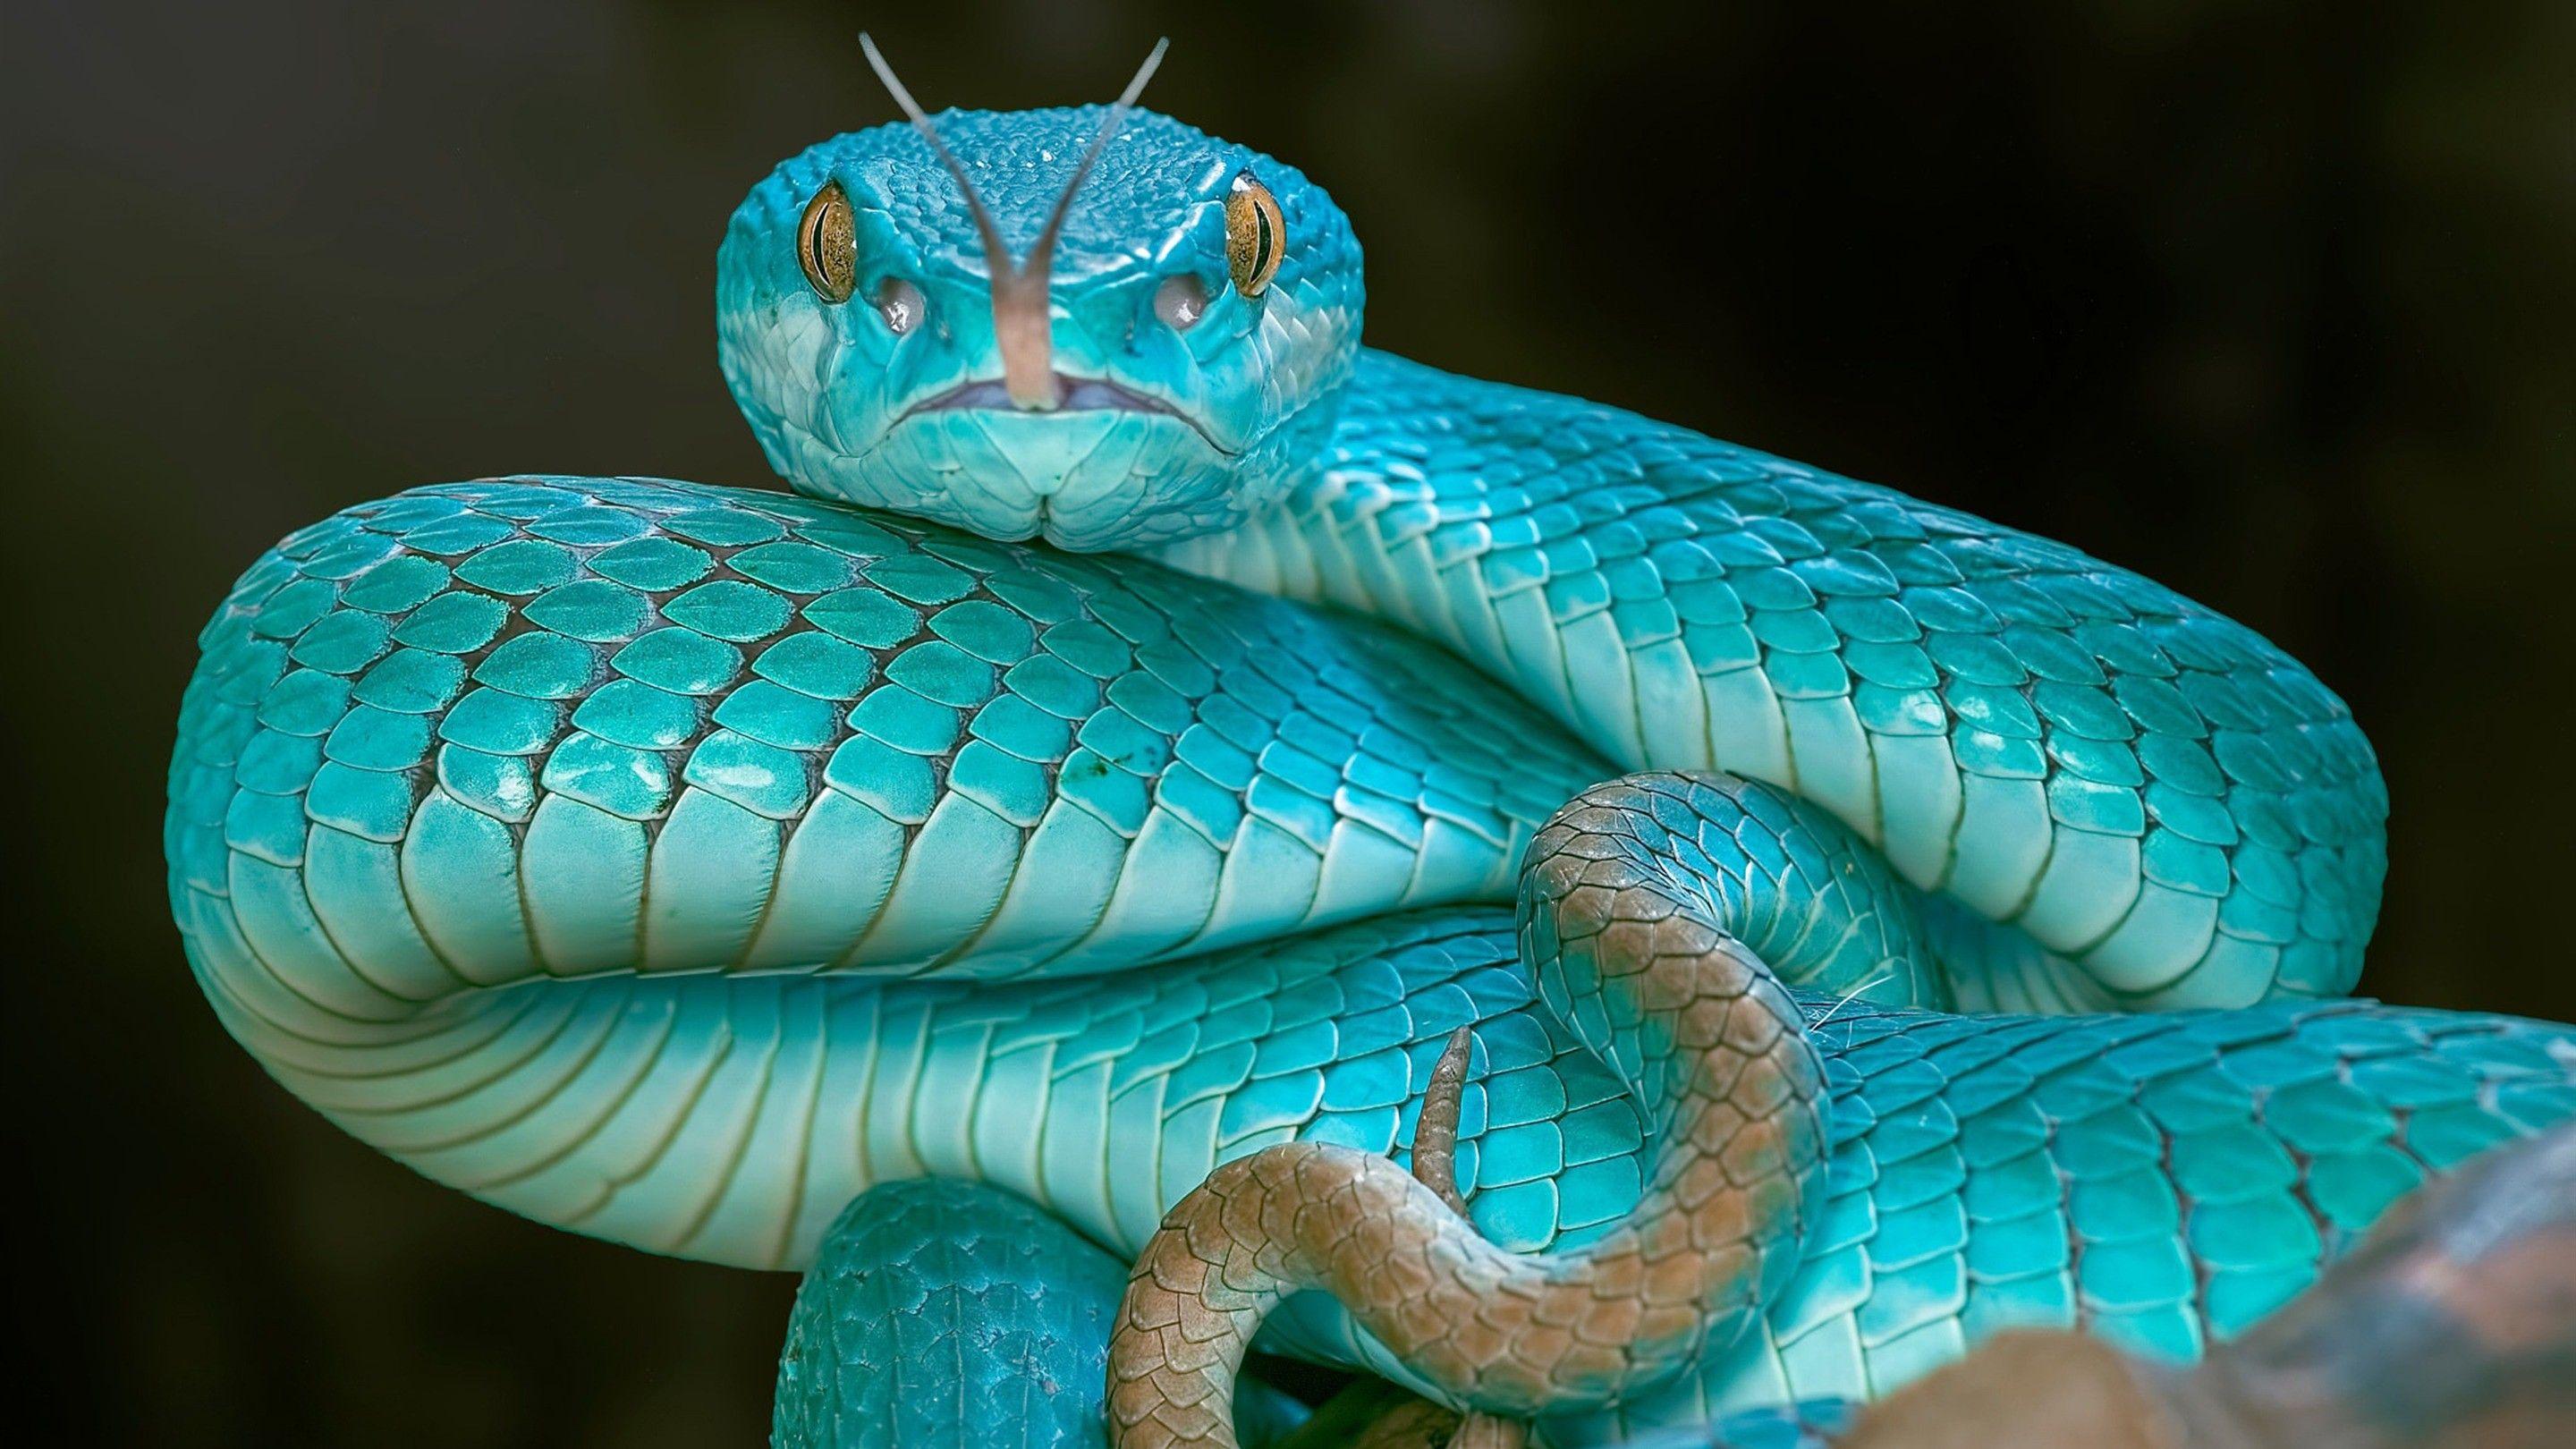 Wallpaper Snake Reptile Rough Wood Viper Images For Desktop Section ...